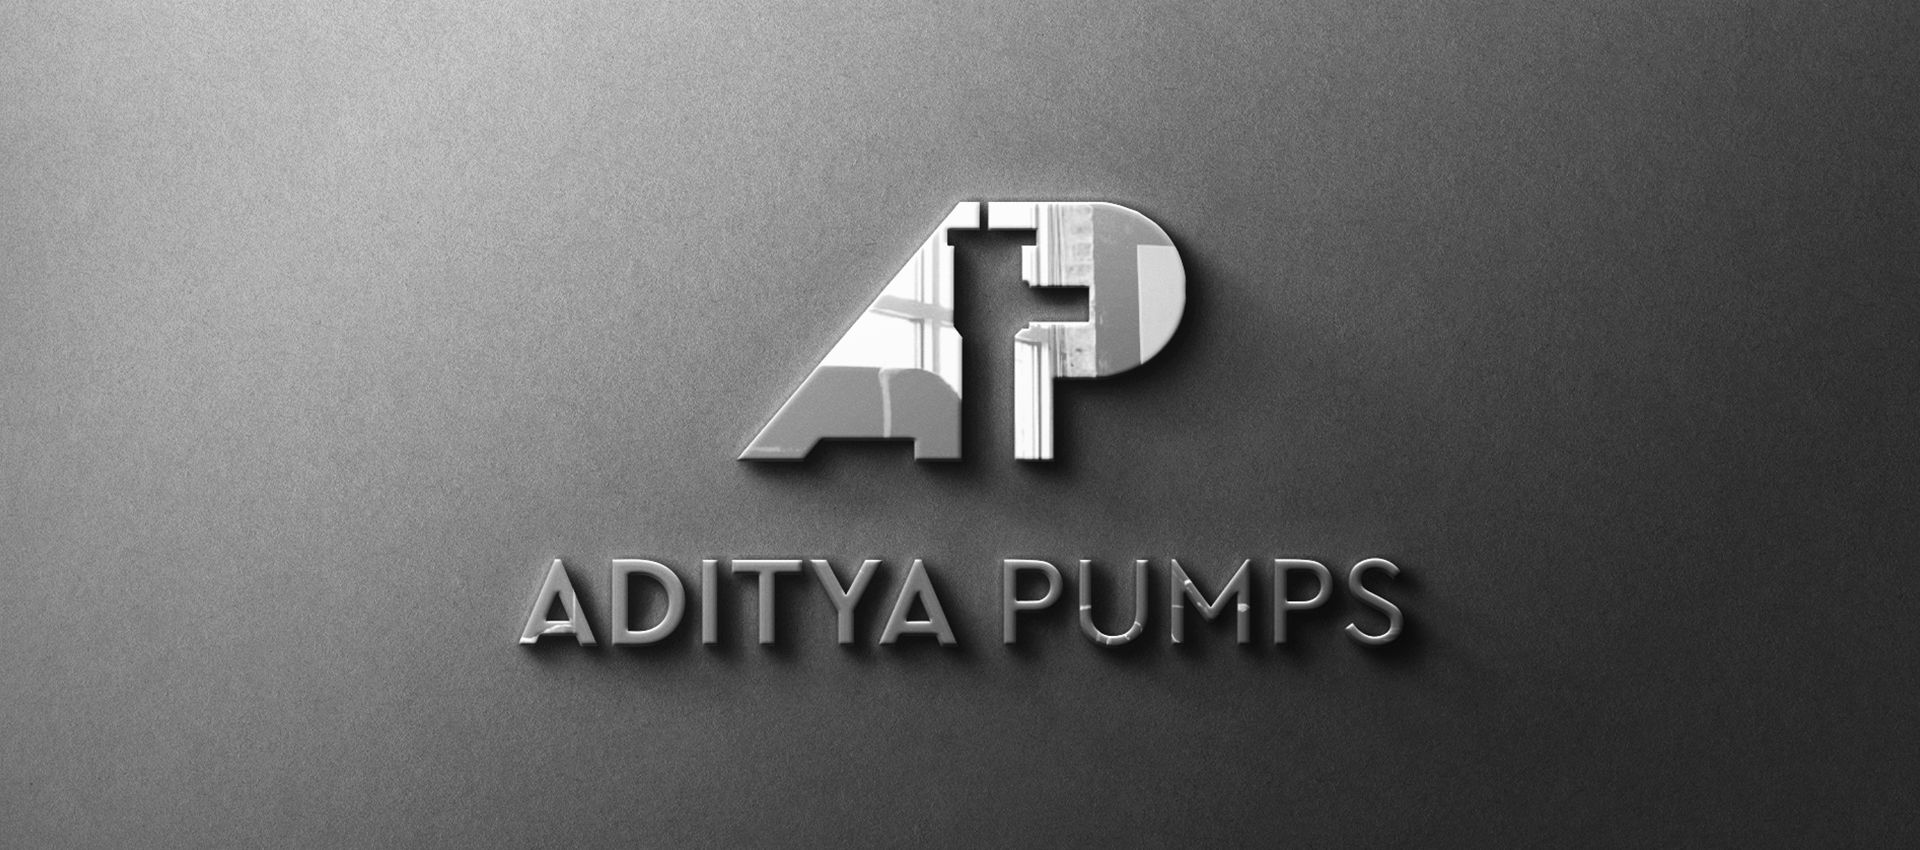 aditya pumps